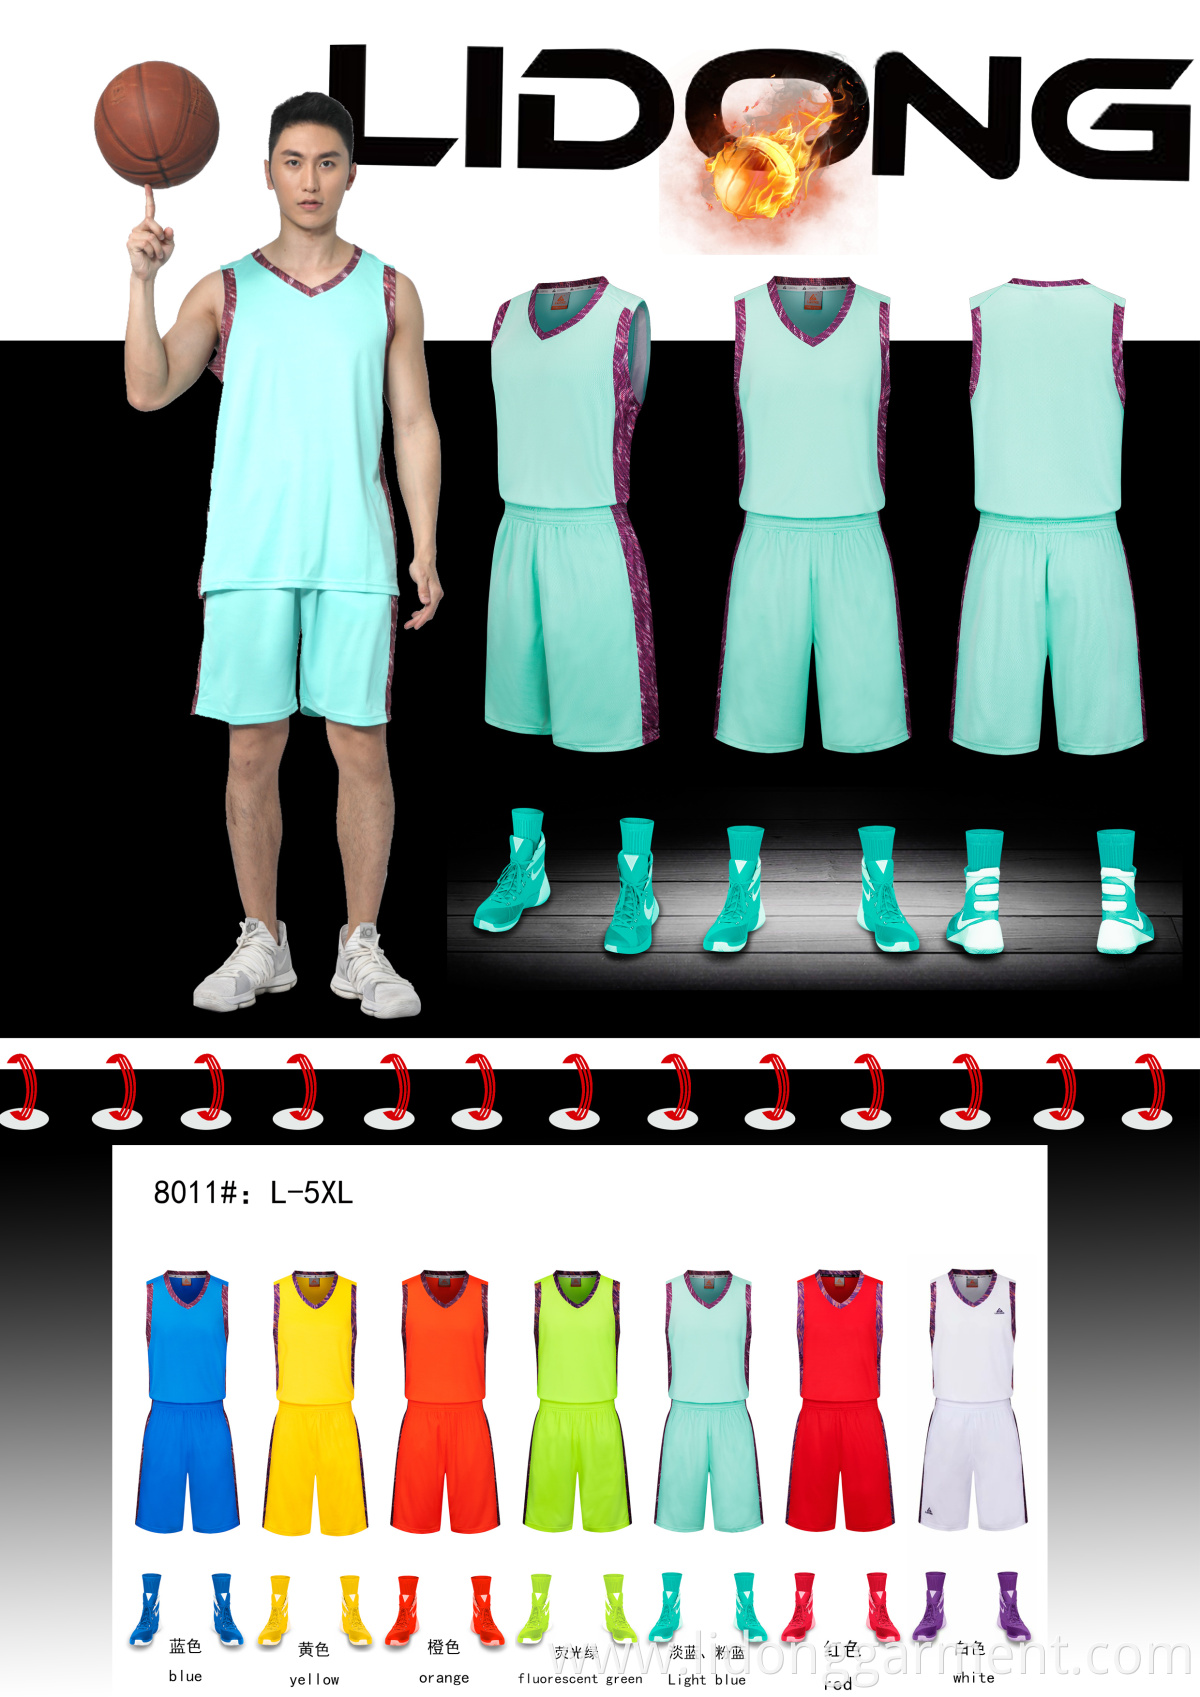 Wholesale blank basketball jerseys basketball uniforms cheap custom basketball jerseys for men